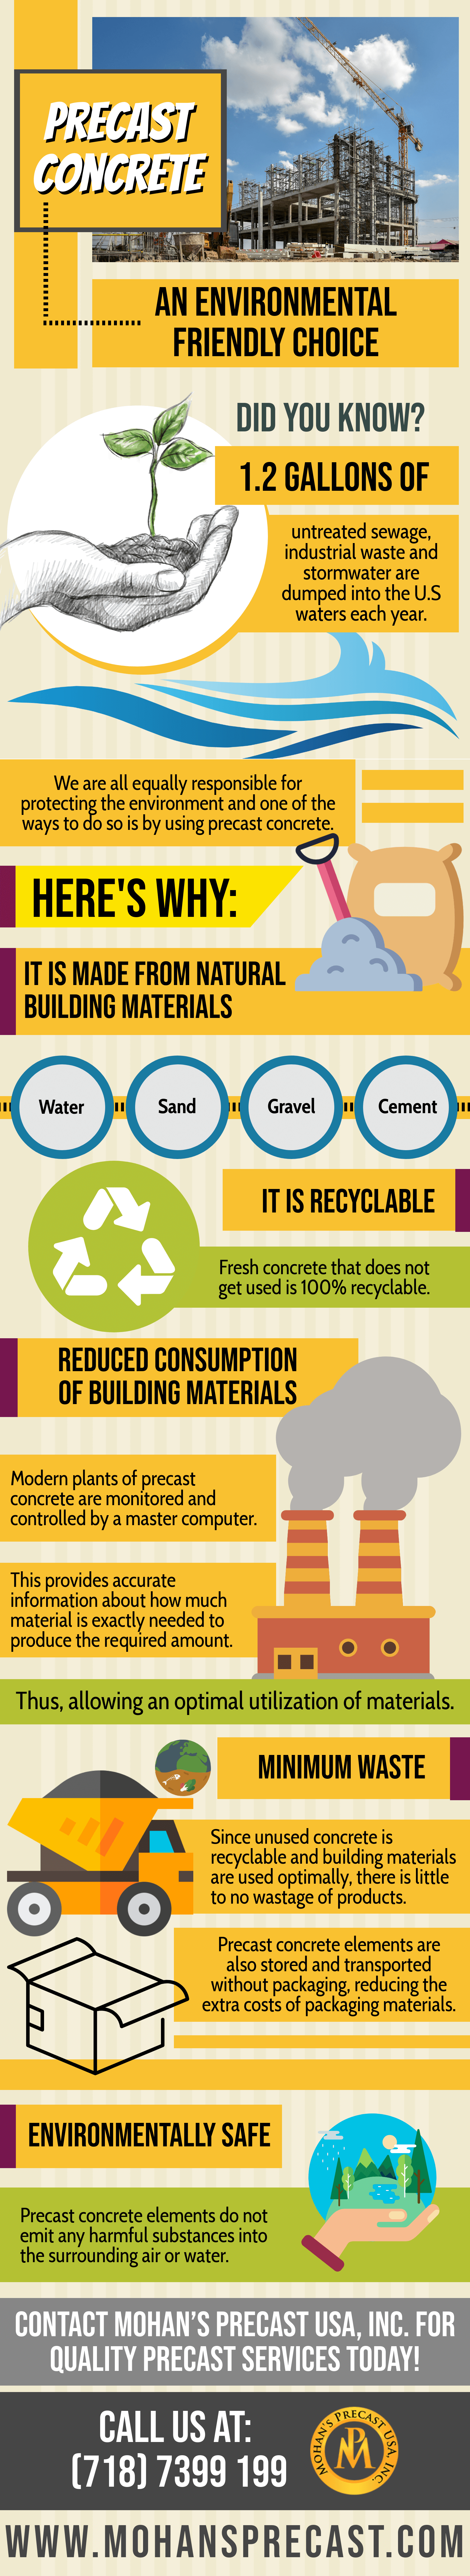 Precast Concrete - An Environmental Friendly Choice